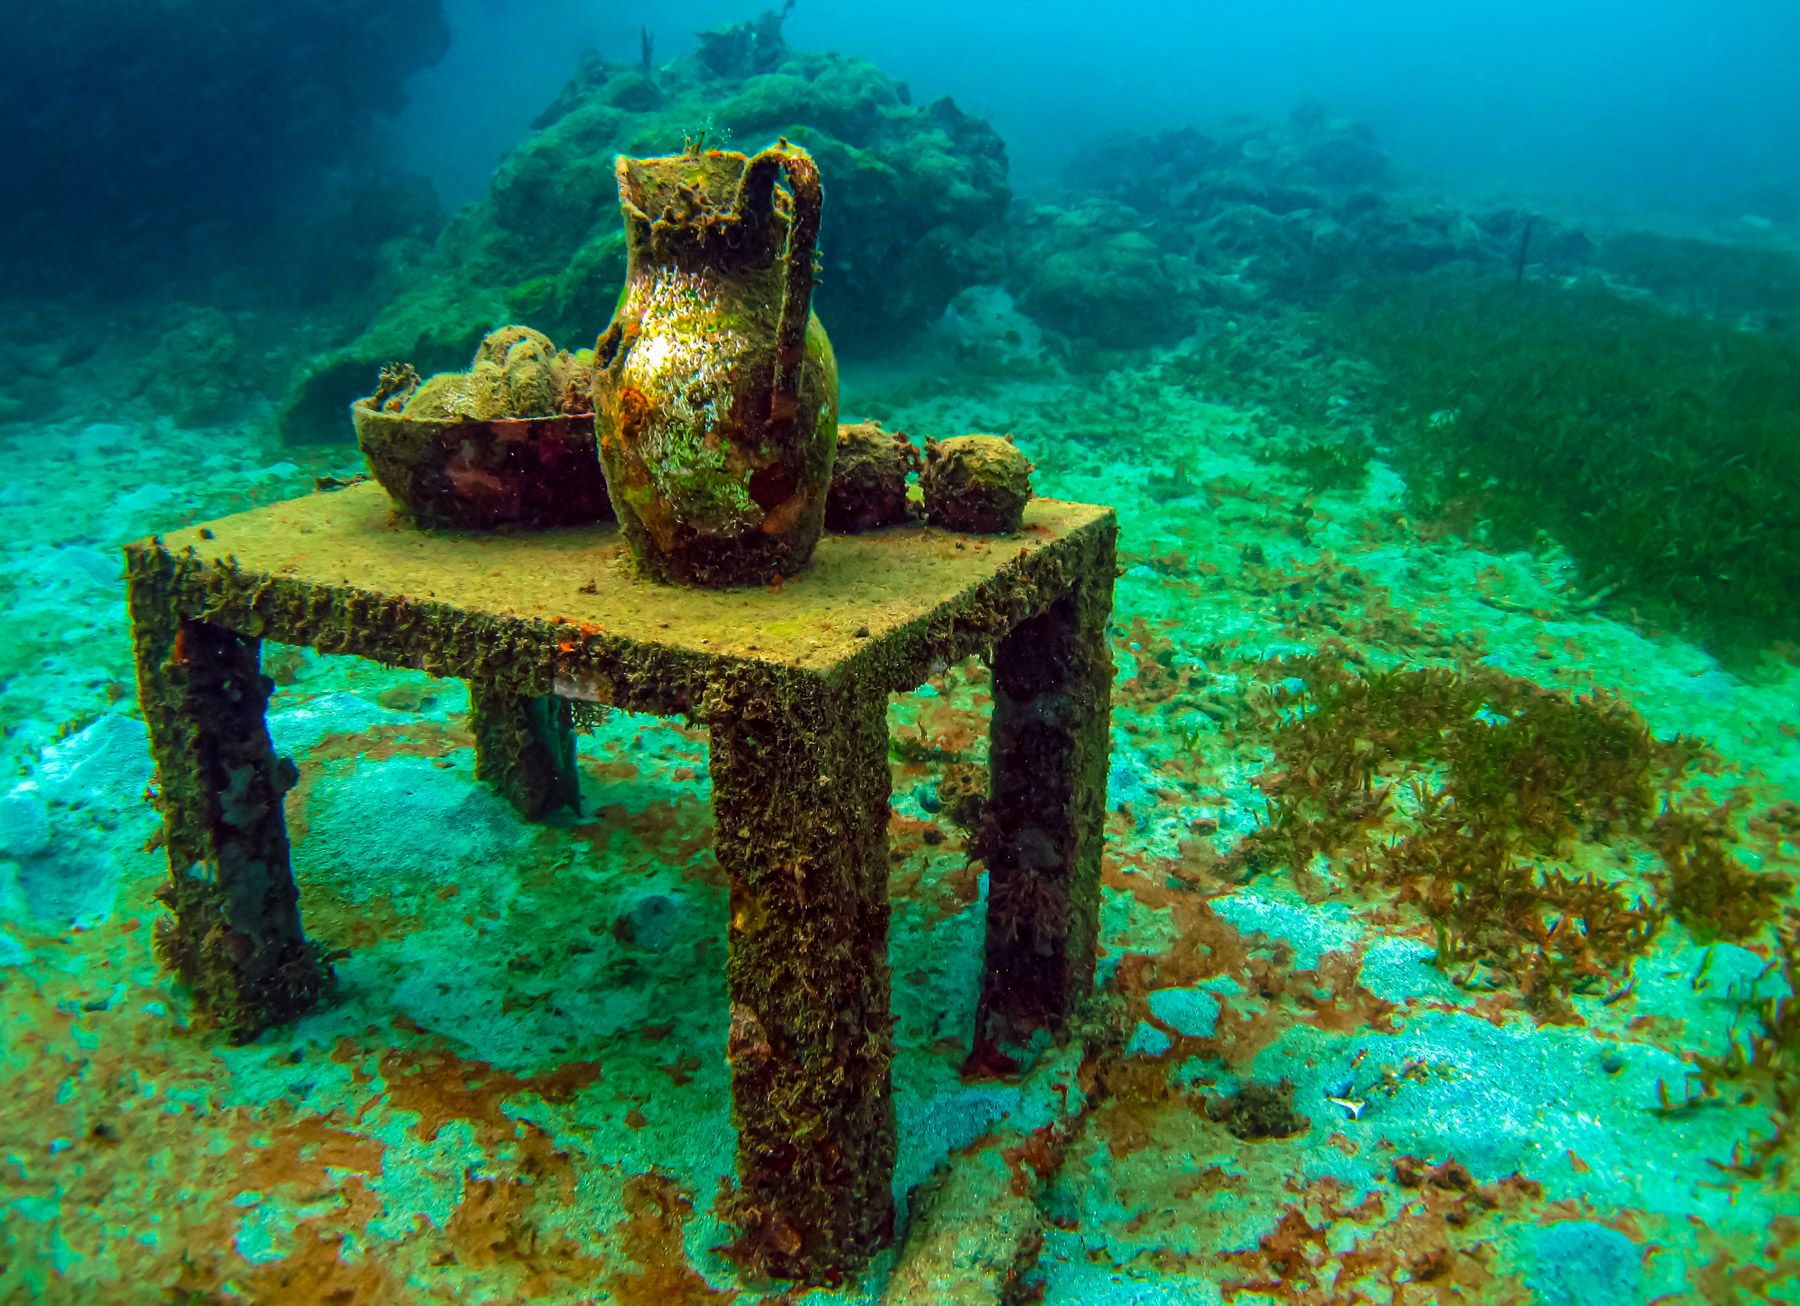 Grenada Underwater Sculpture Park, Info & Guide